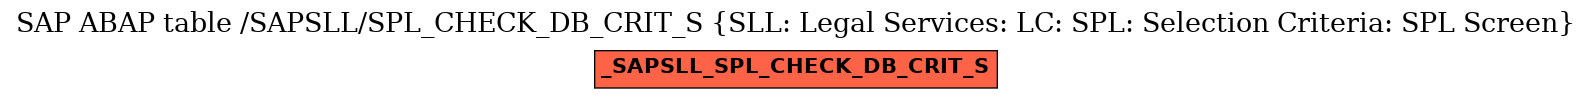 E-R Diagram for table /SAPSLL/SPL_CHECK_DB_CRIT_S (SLL: Legal Services: LC: SPL: Selection Criteria: SPL Screen)